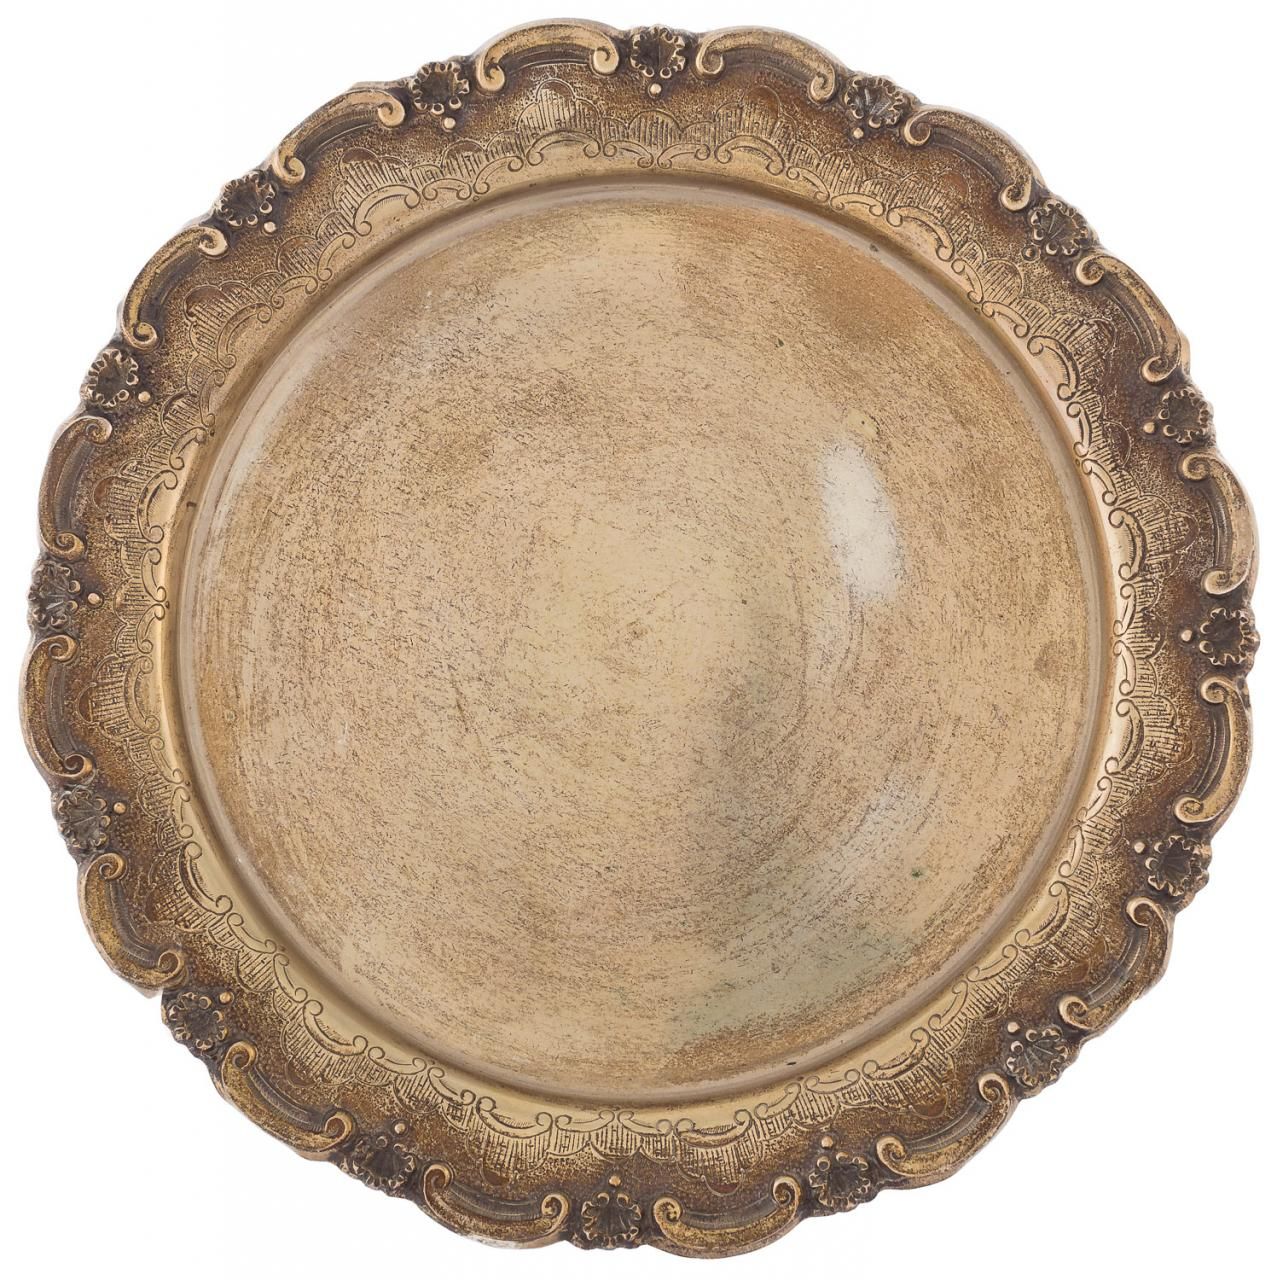 Null 圆形银质托盘，装饰有 "caes "和扇贝。

30 x 30 cm
重量：345 g